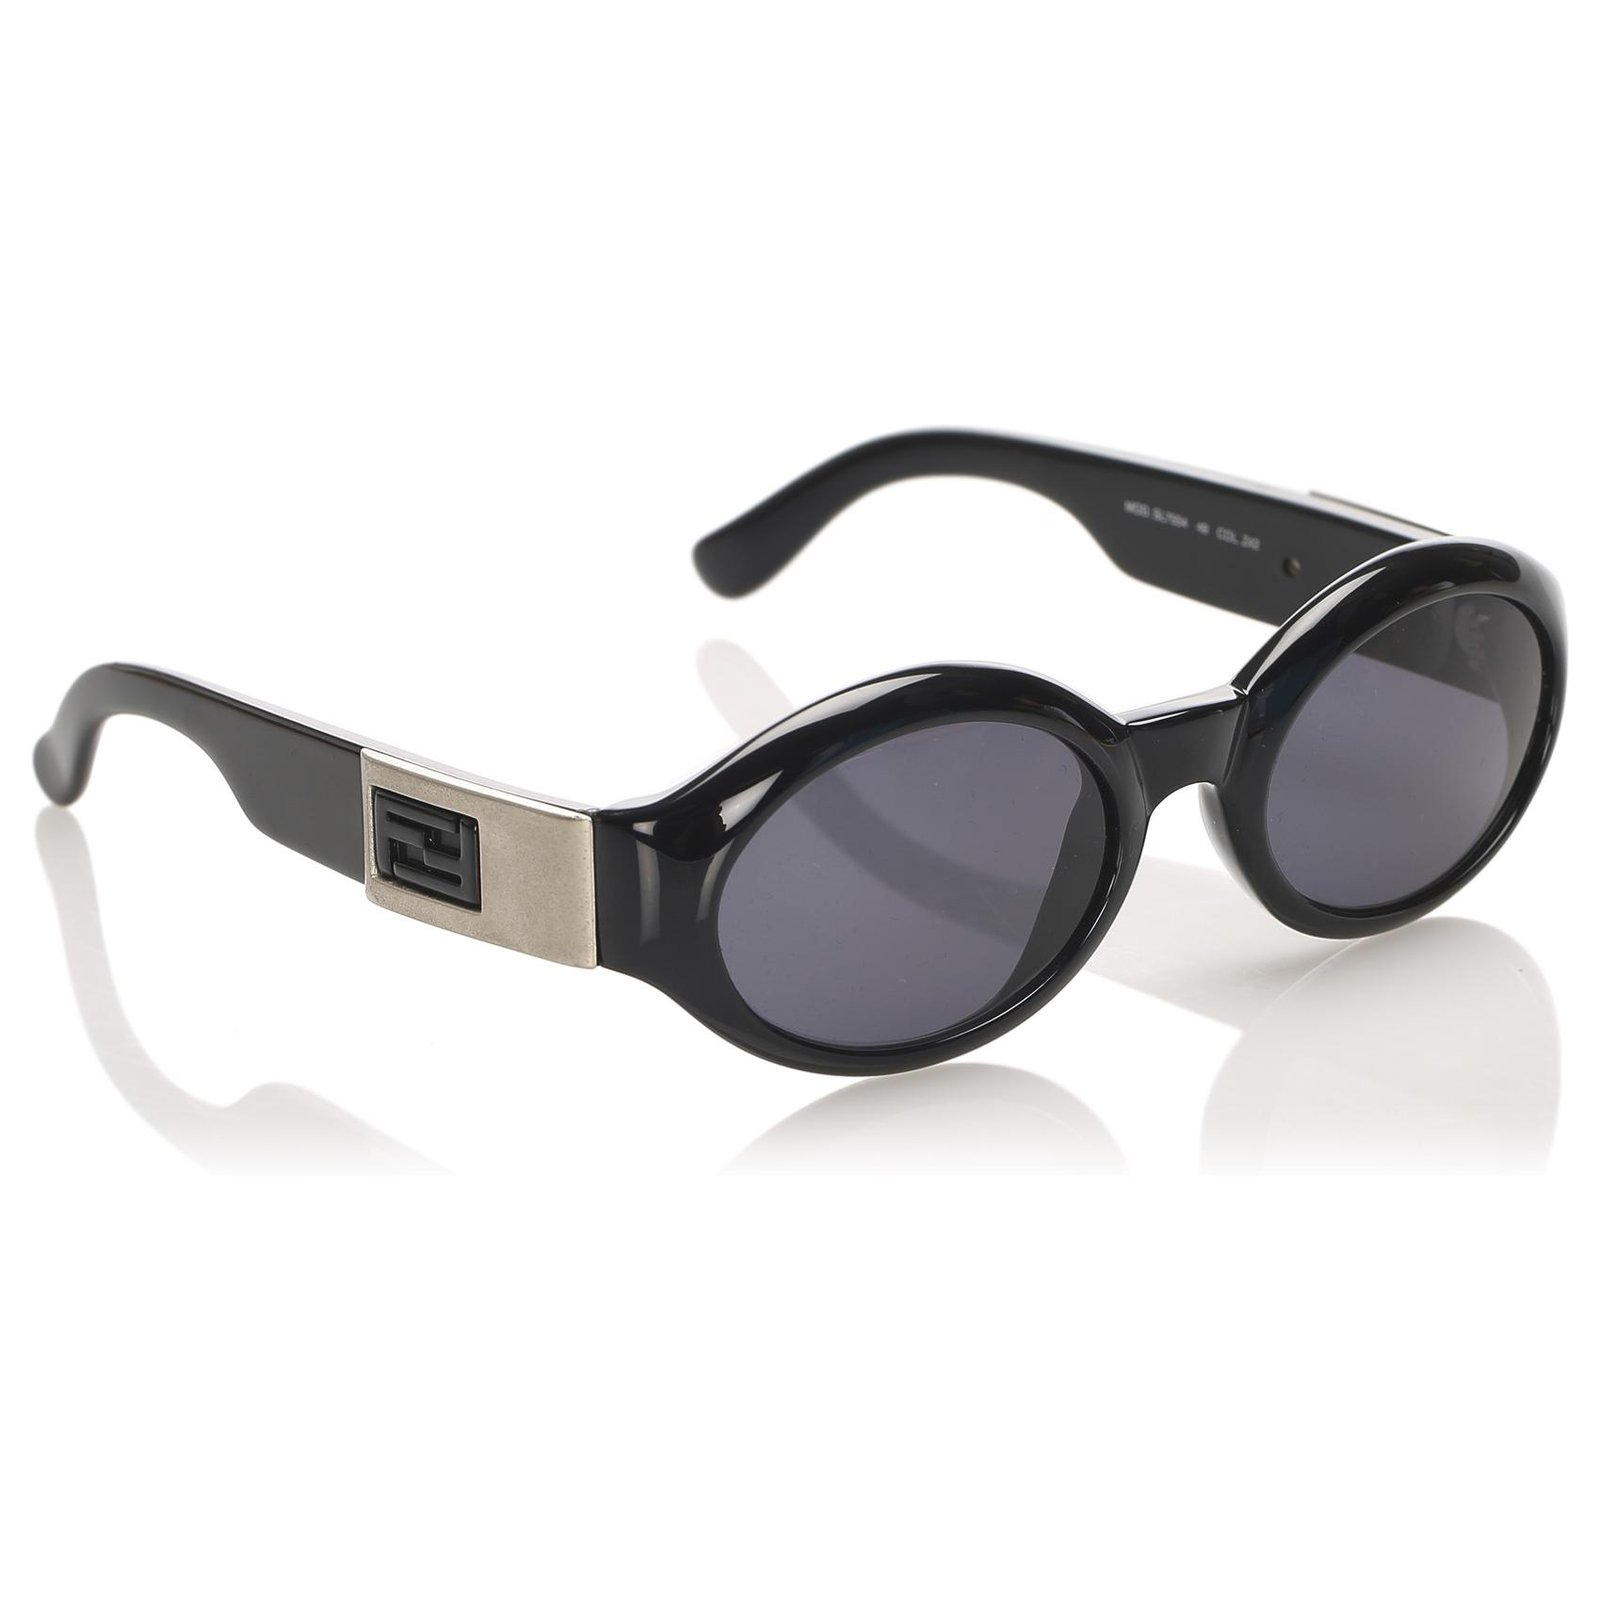 fendi black sunglasses